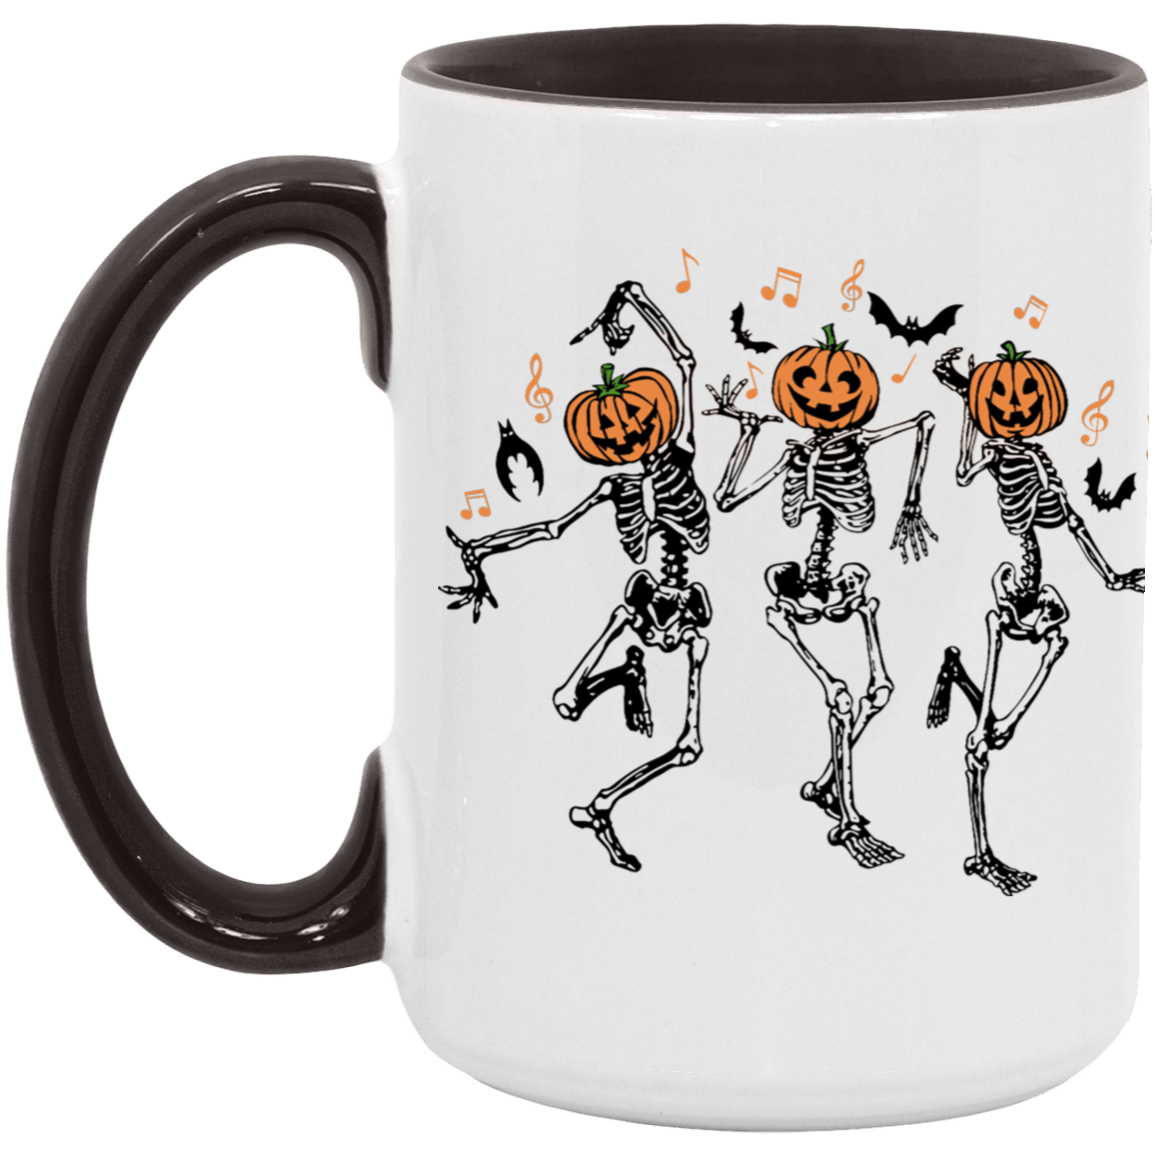 Dancing Skeleton Coffee Mug